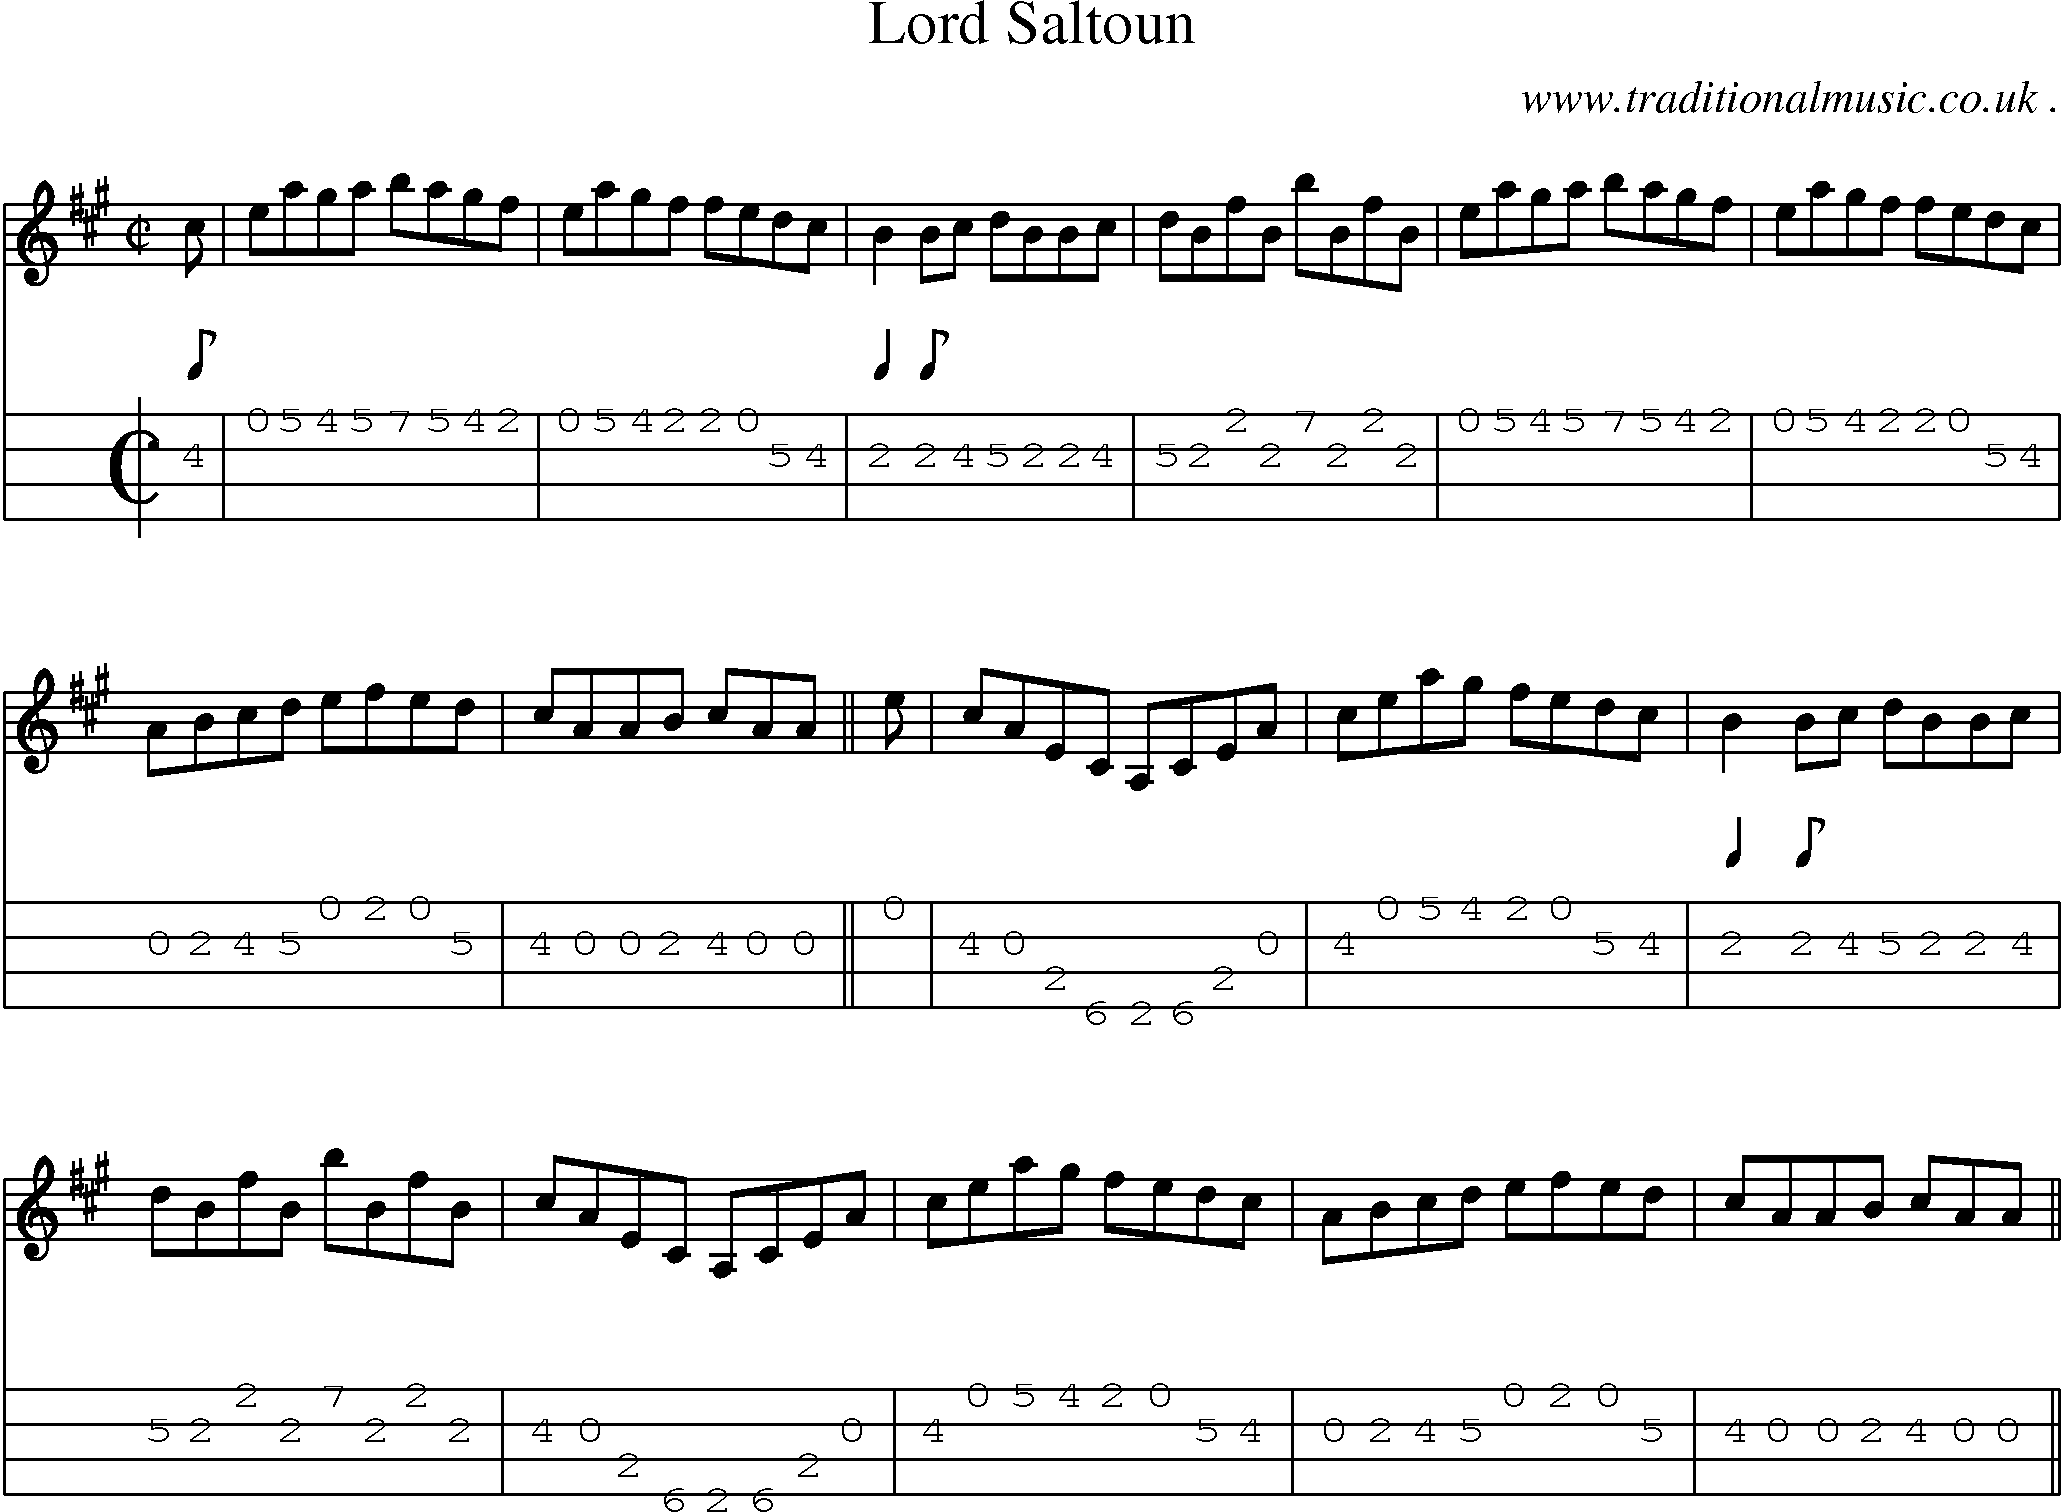 Sheet-music  score, Chords and Mandolin Tabs for Lord Saltoun